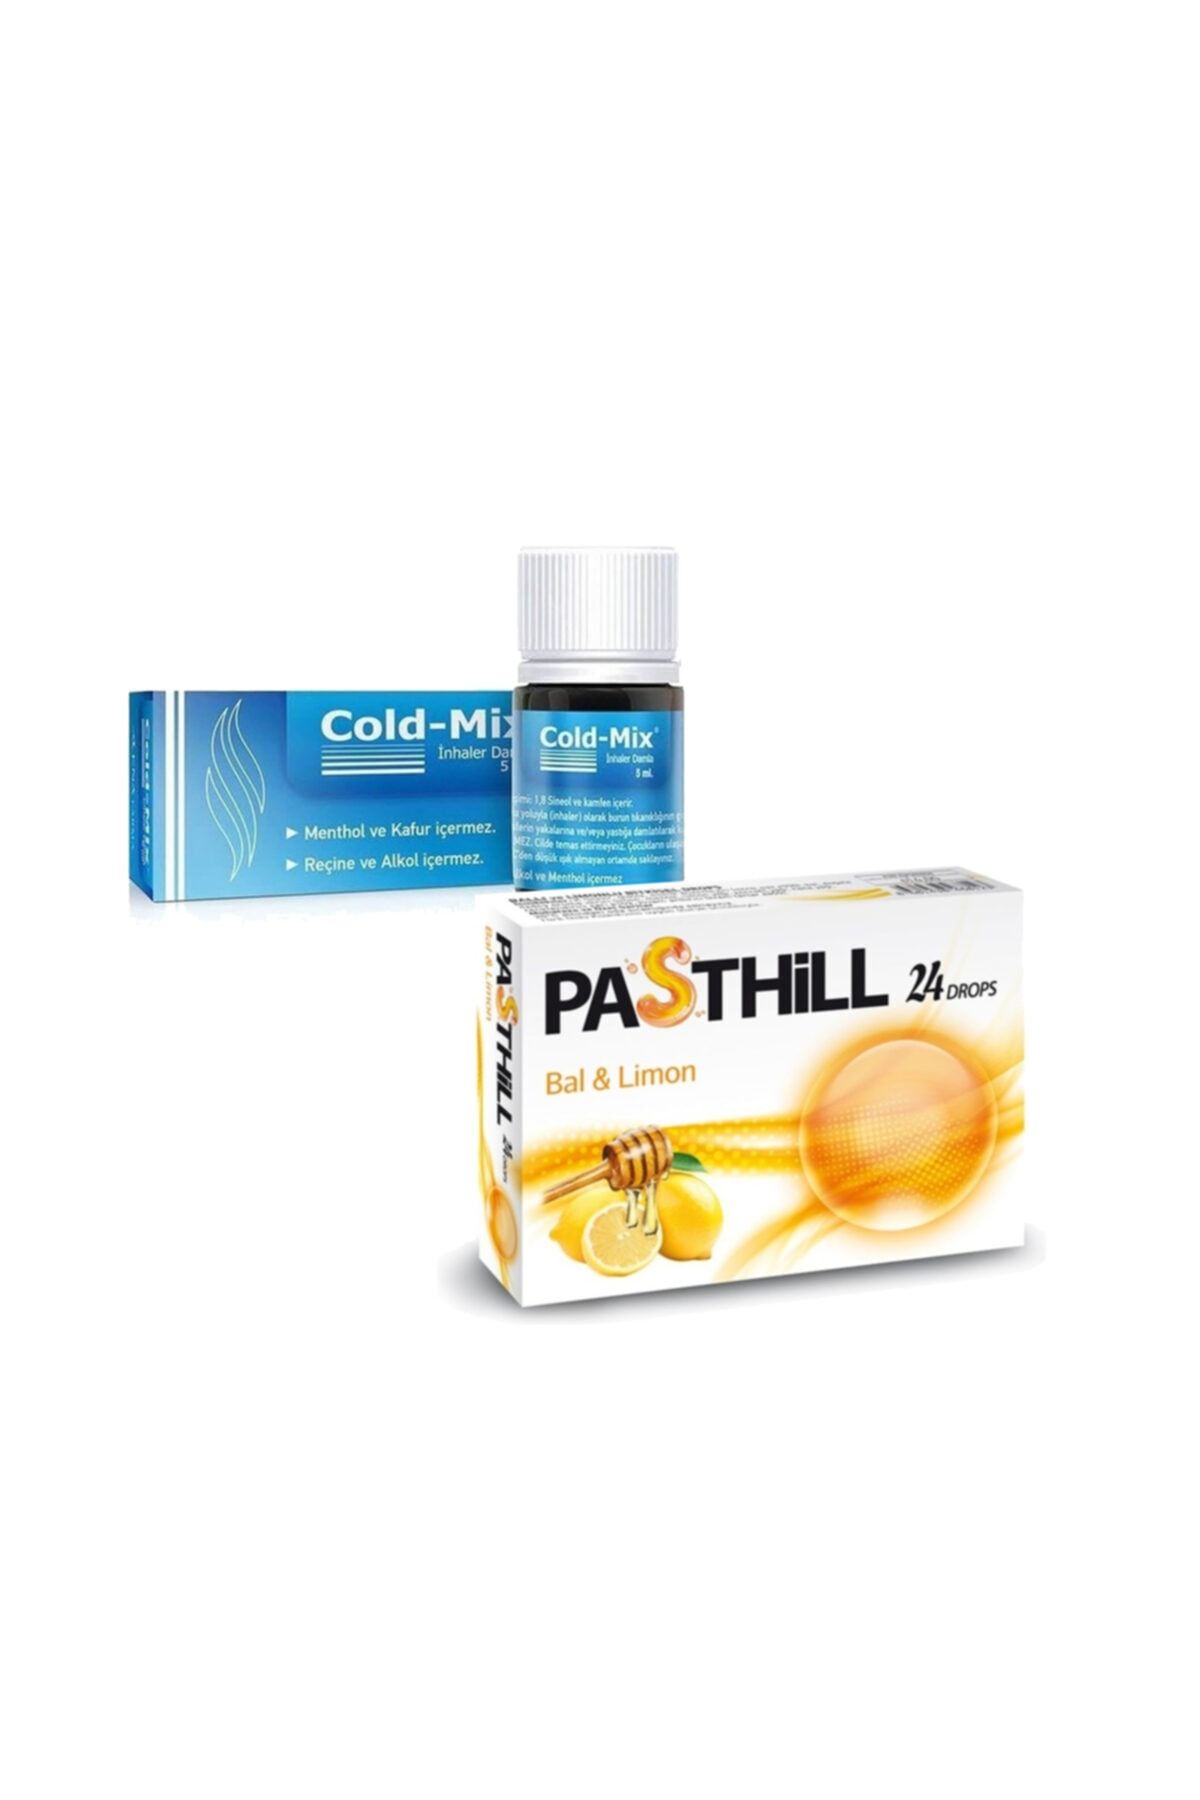 Cold-Mix Inhaler 5 Ml Damla + Pasthill 24 Drops